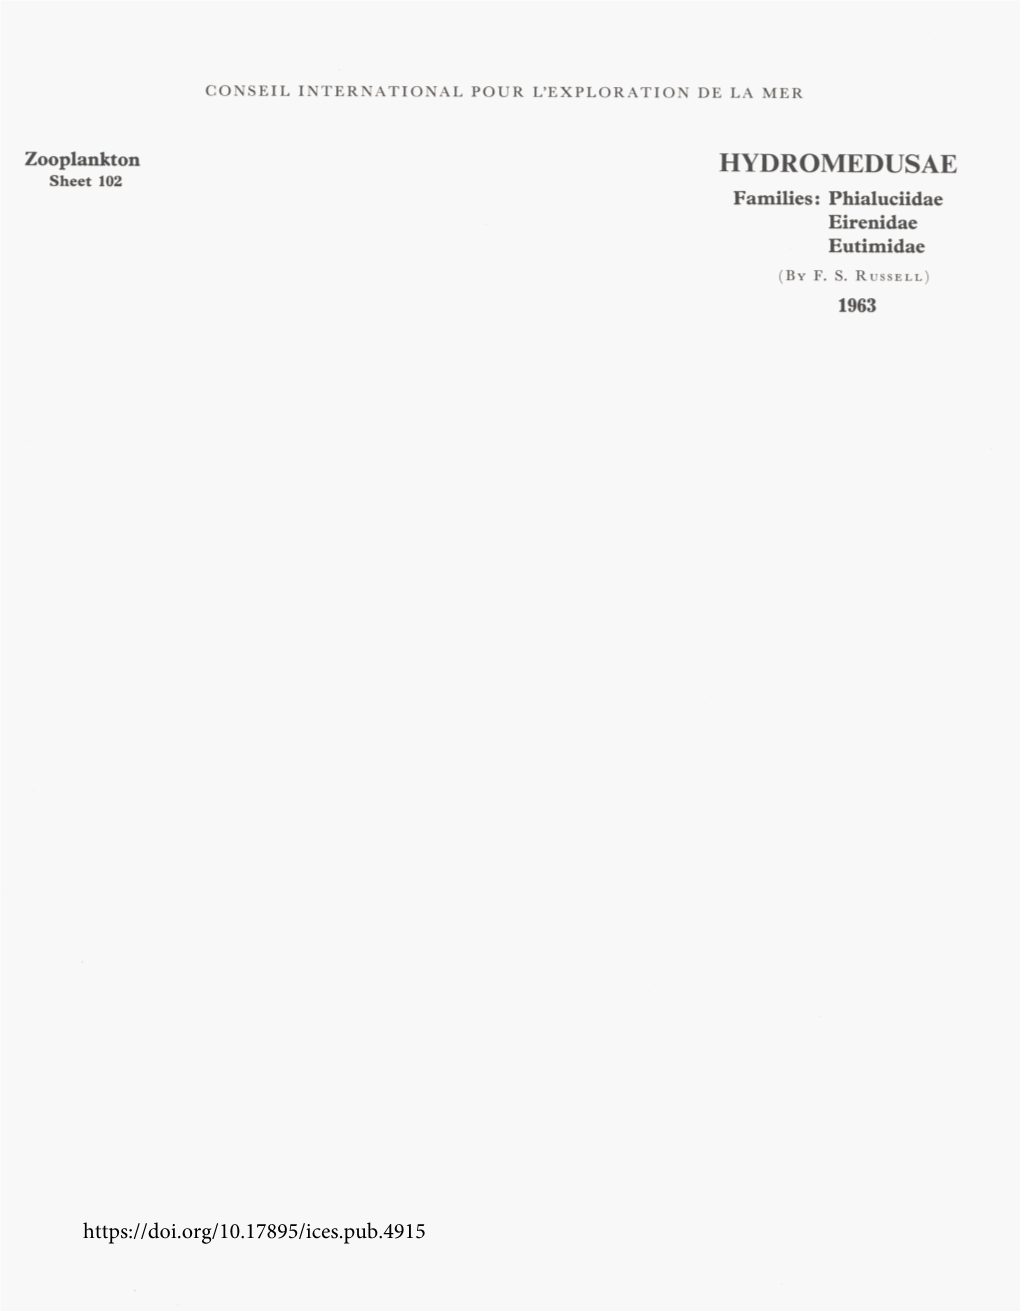 HYDROMEDUSAE Sheet 102 Families: Phialuciidae Eirenidae Eutimidae (BY F